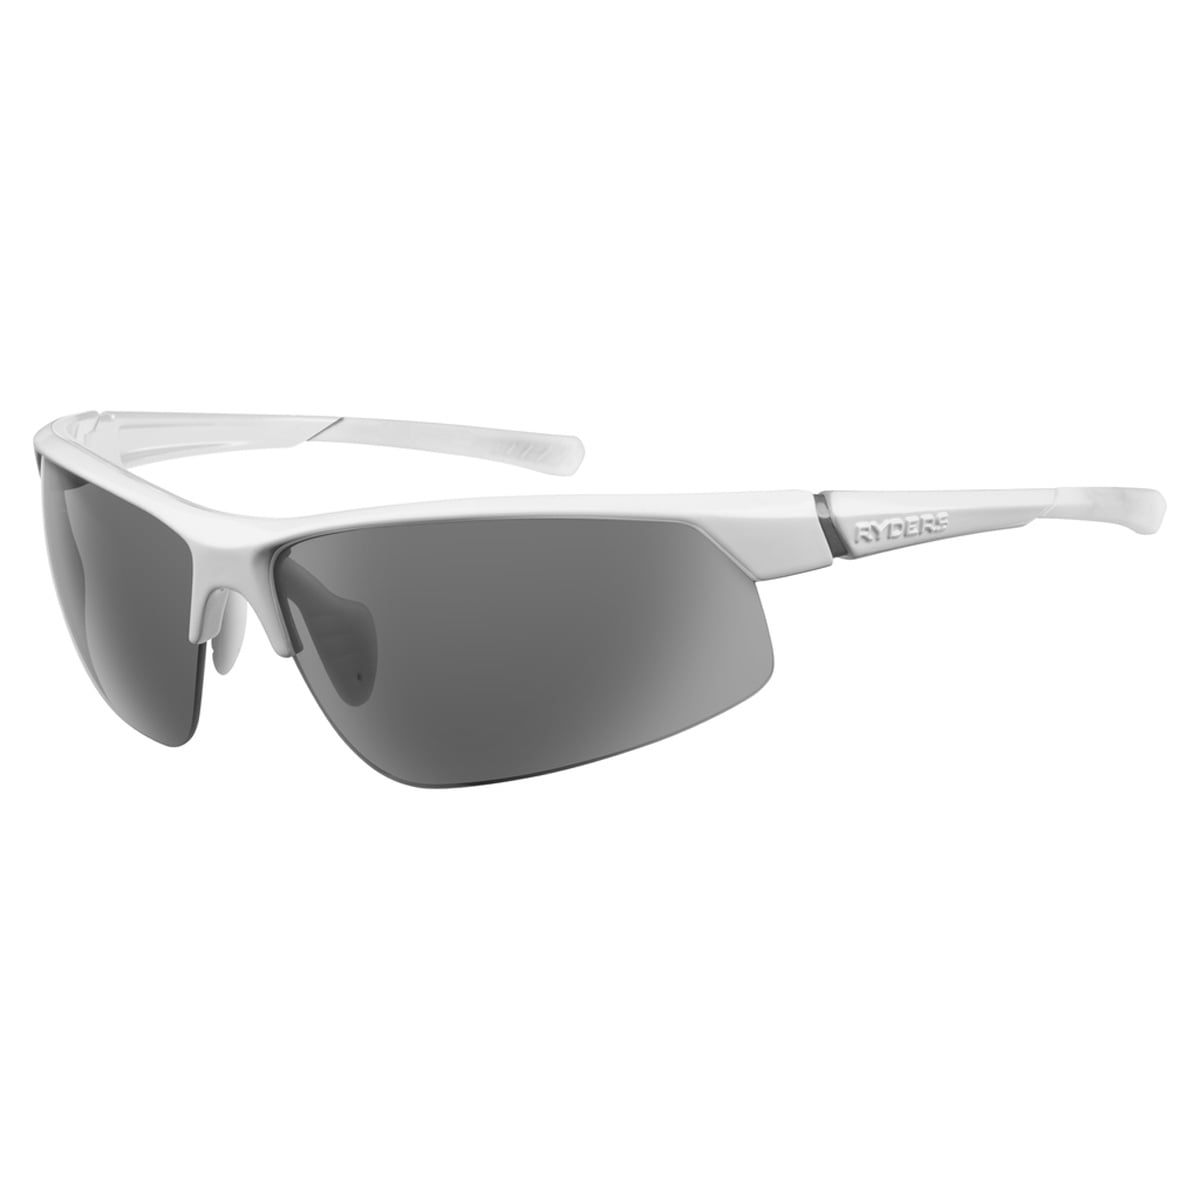 Ryders Eyewear Saber Standard Sunglasses - Walmart.com